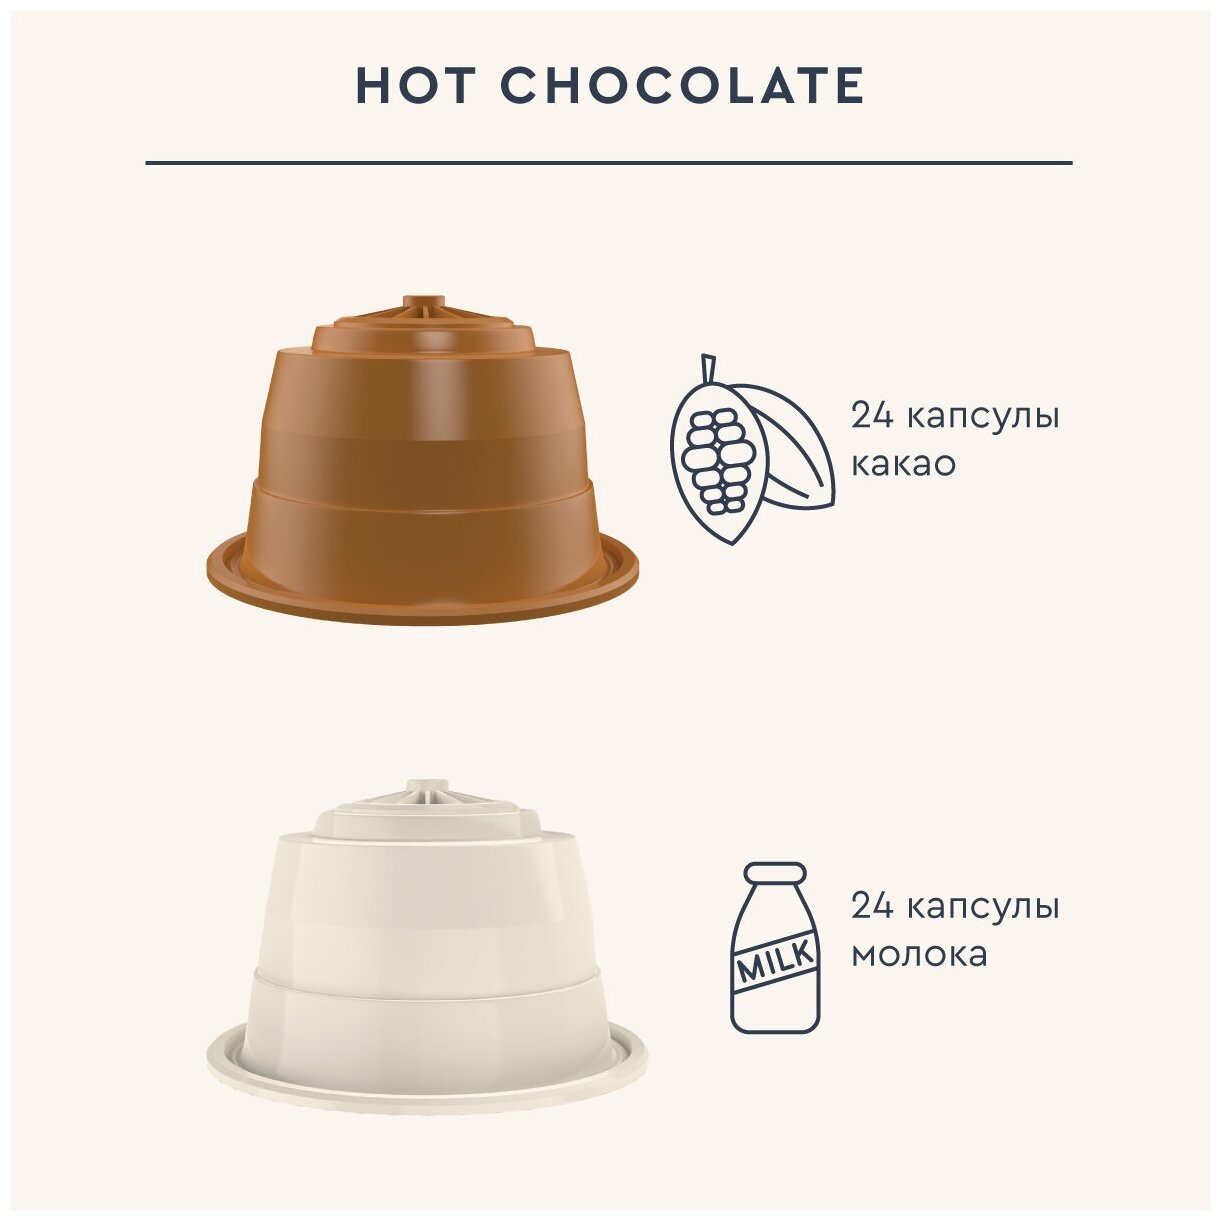 Горячий шоколад в капсулах Home Barista "Hot chocolate", формата Dolce Gusto (Дольче Густо) - фотография № 2